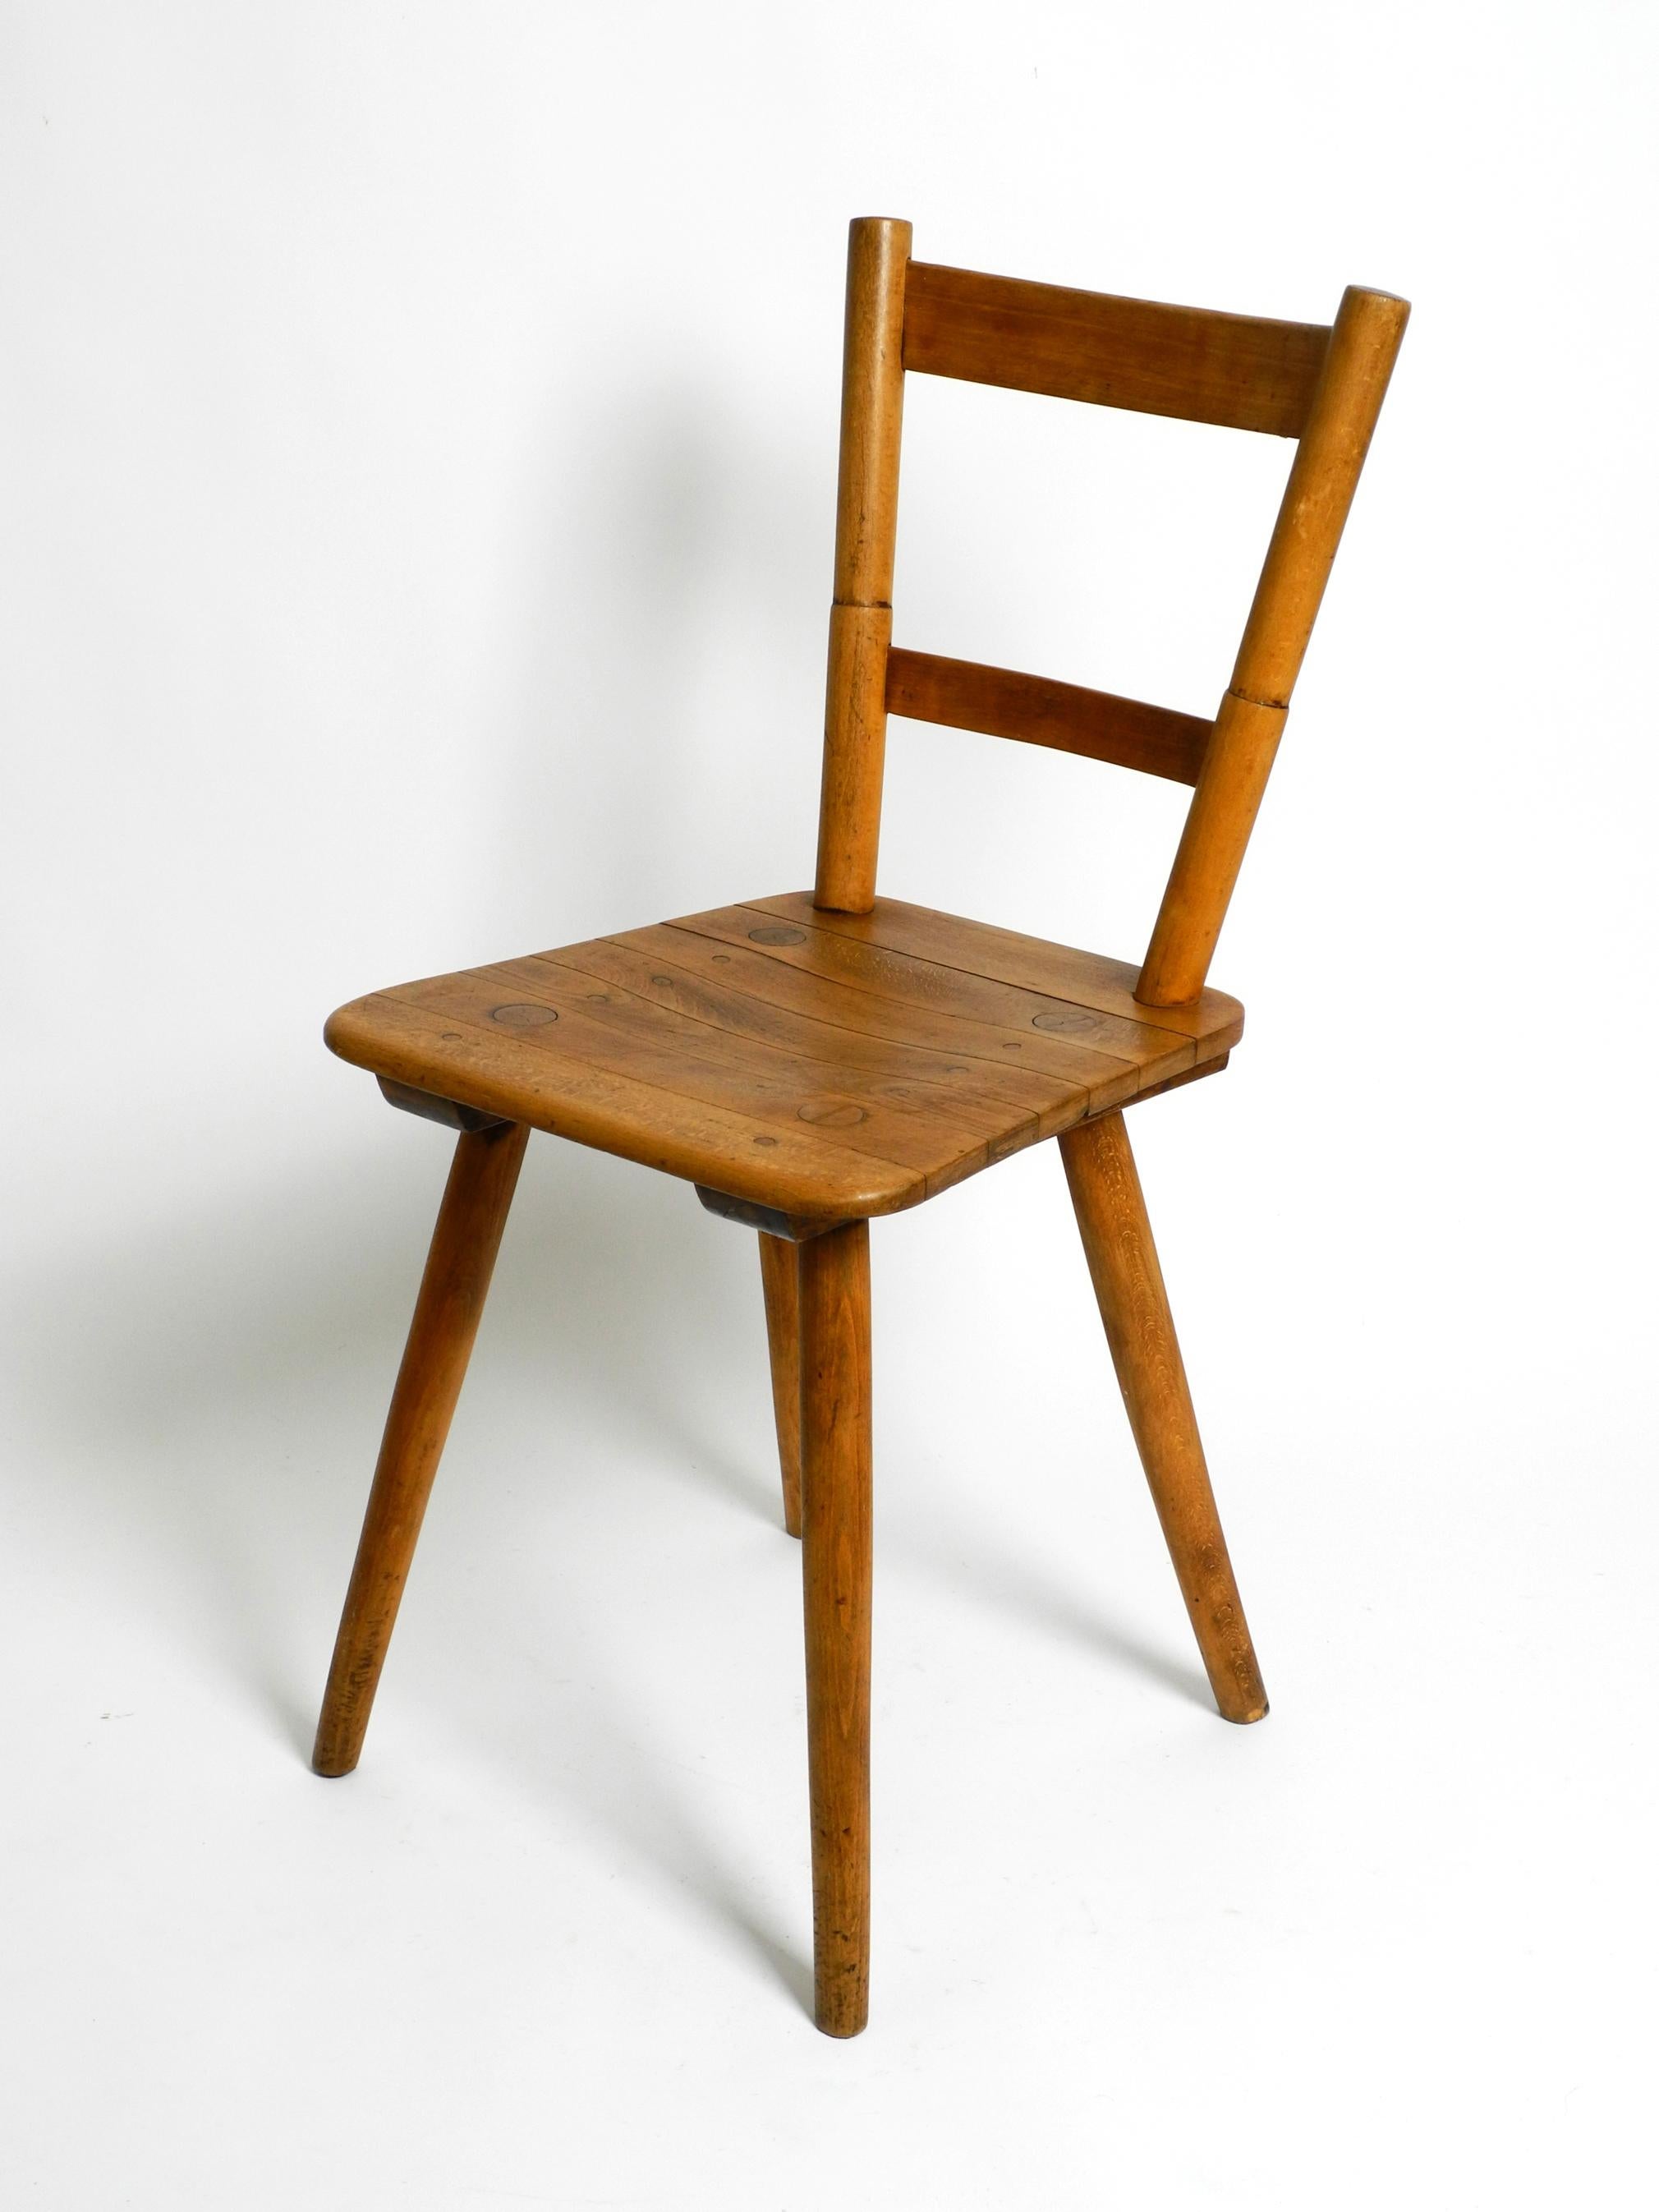 1930s Tübinger chair by the architect Prof. Adolf Gustav Schneck for Schäfer  For Sale 12